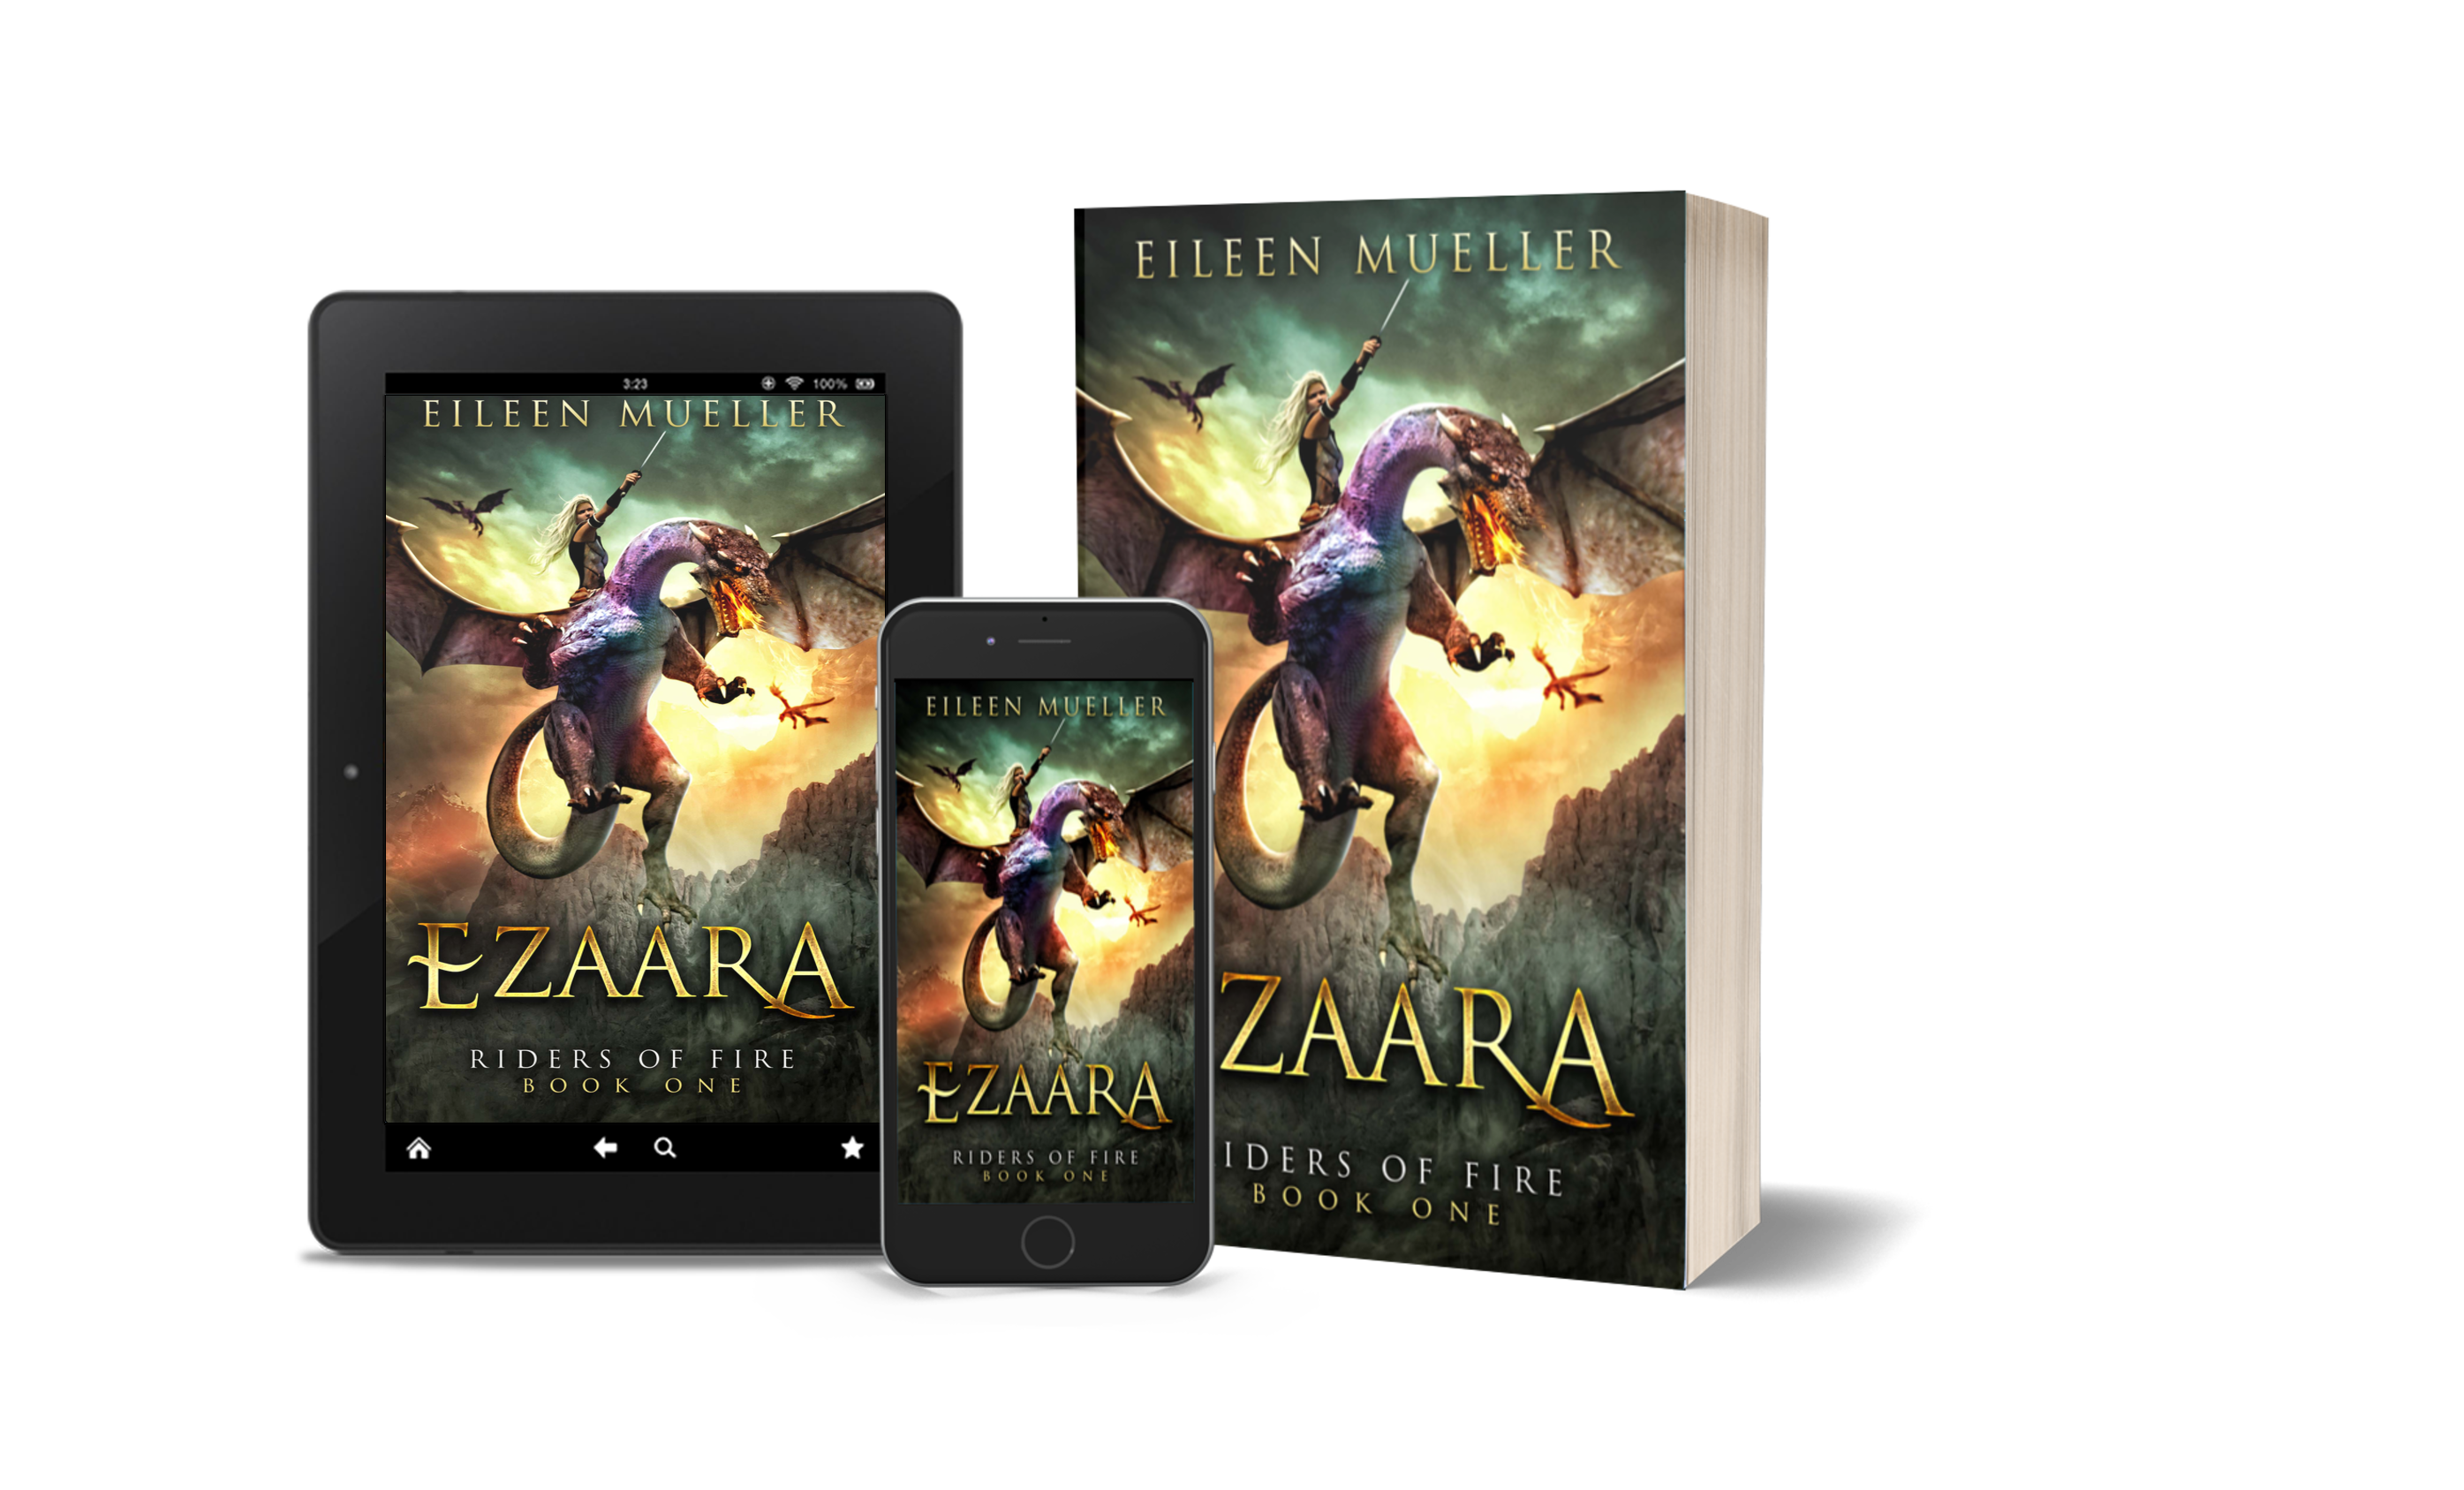 Ezaara, Riders of Fire book 1 by Eileen Mueller